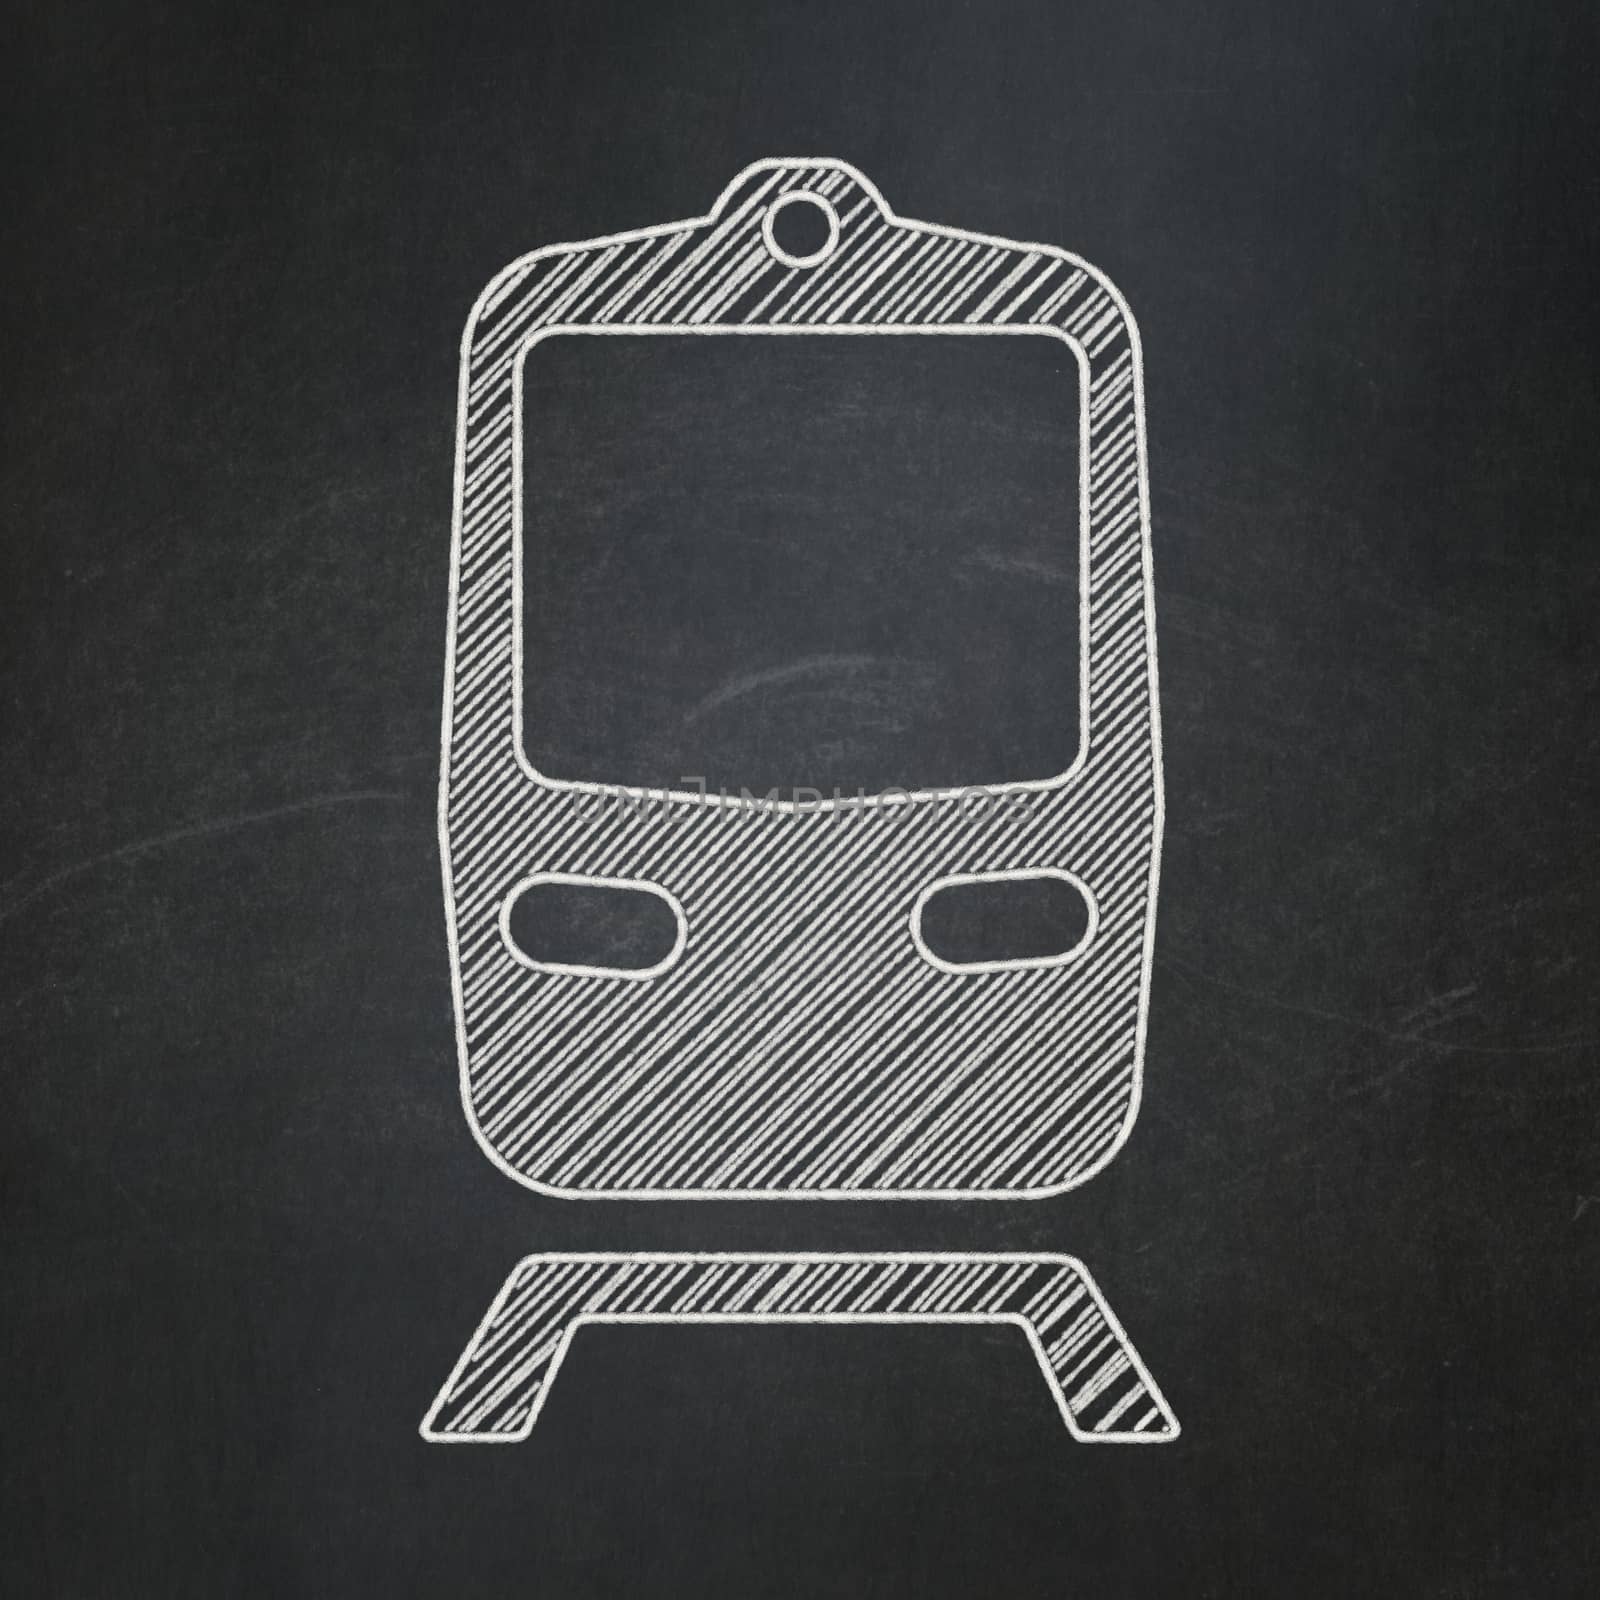 Travel concept: Train on chalkboard background by maxkabakov